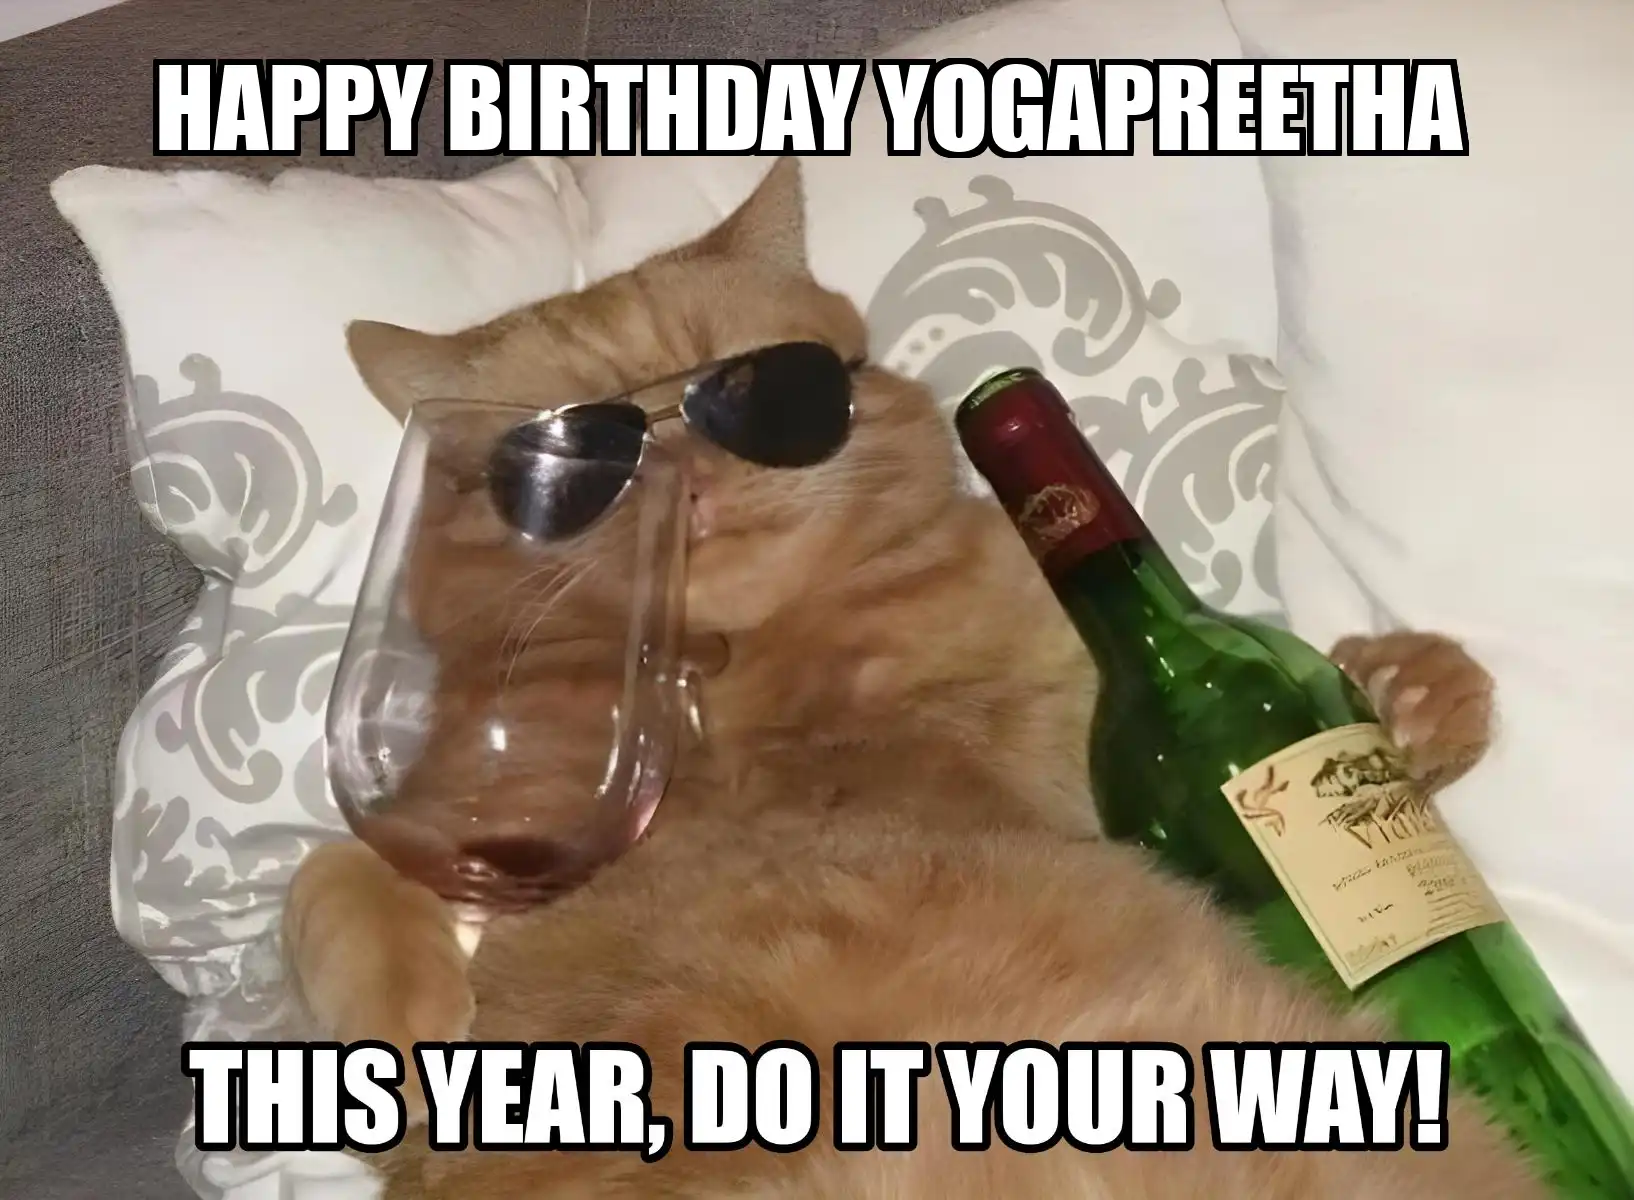 Happy Birthday Yogapreetha This Year Do It Your Way Meme